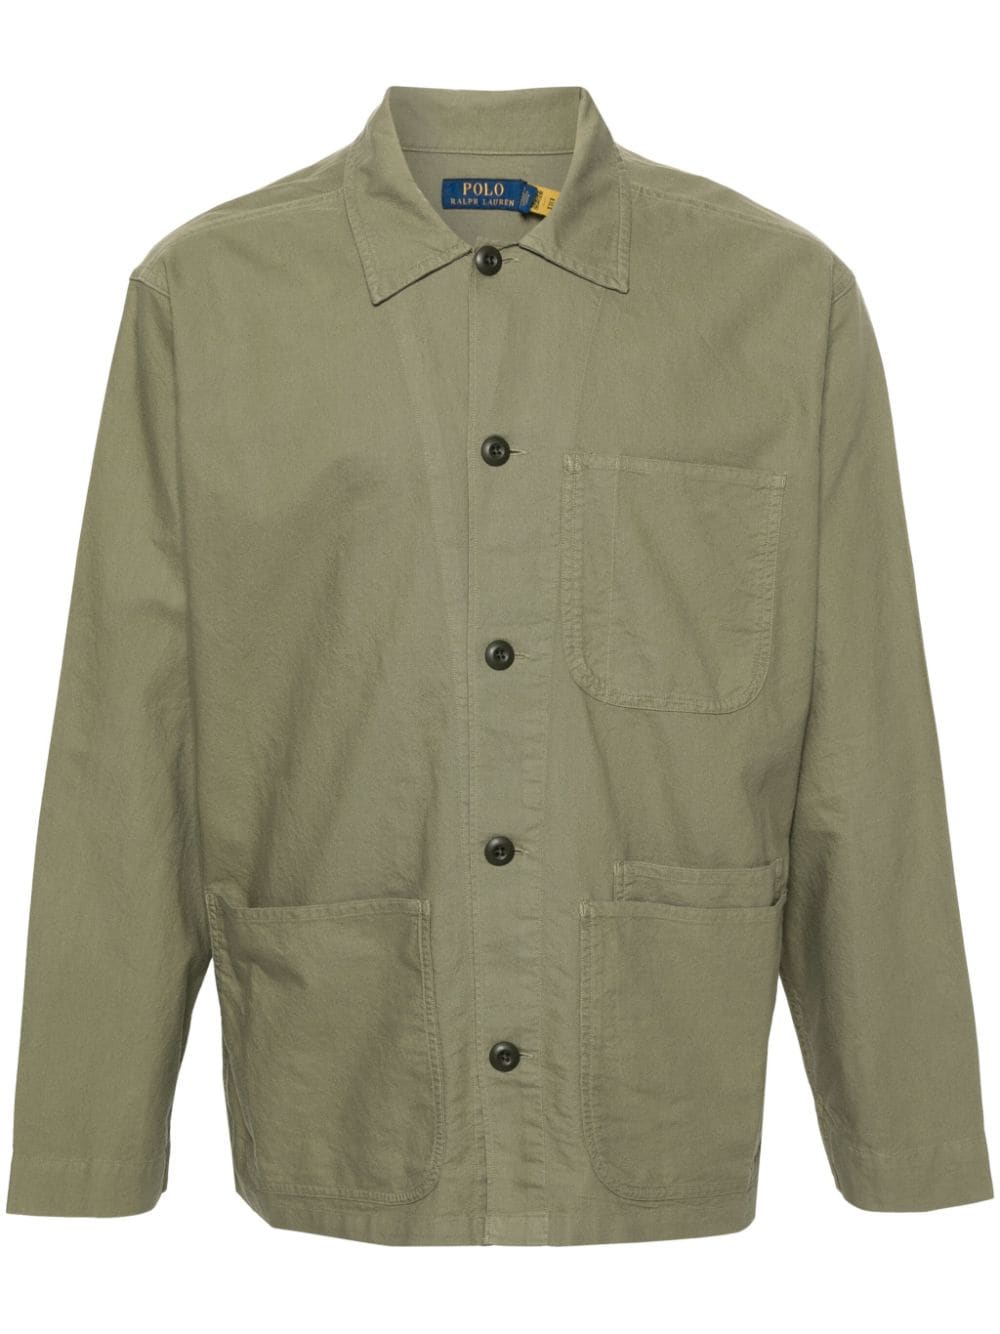 Polo Ralph Lauren cotton shirt jacket - Green von Polo Ralph Lauren